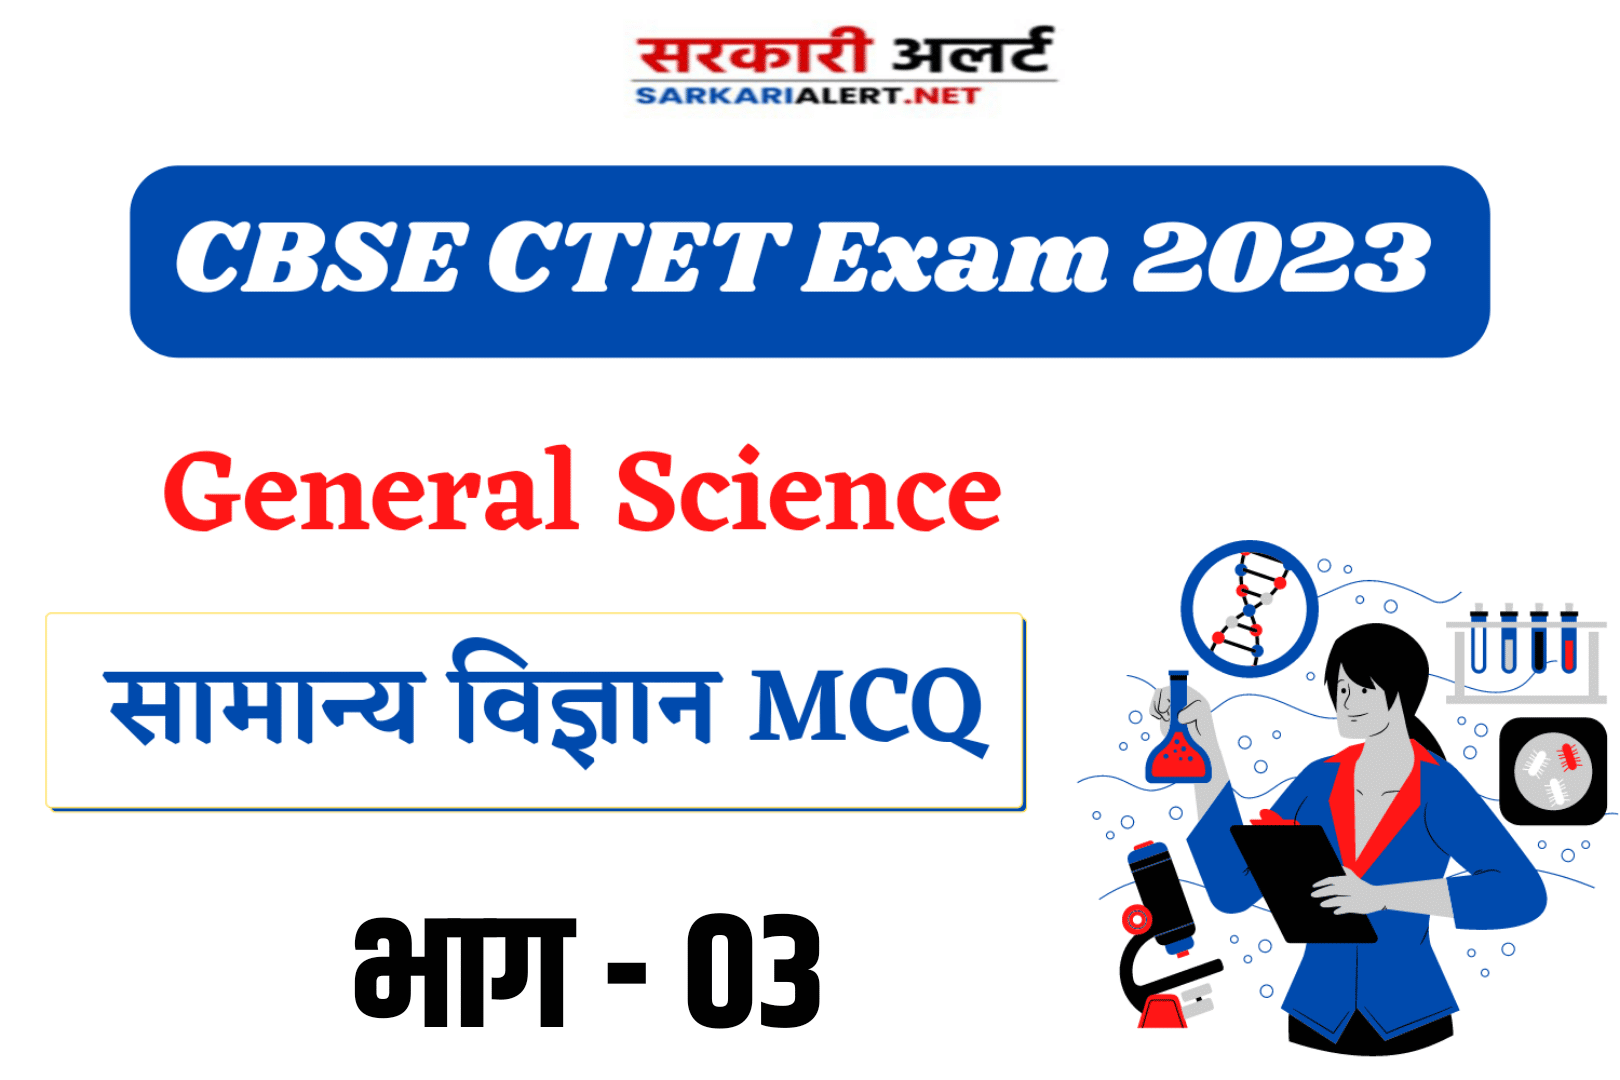 CBSE CTET Exam 2023, Science MCQ - 03 | सामान्य विज्ञान के महत्वपूर्ण प्रश्न